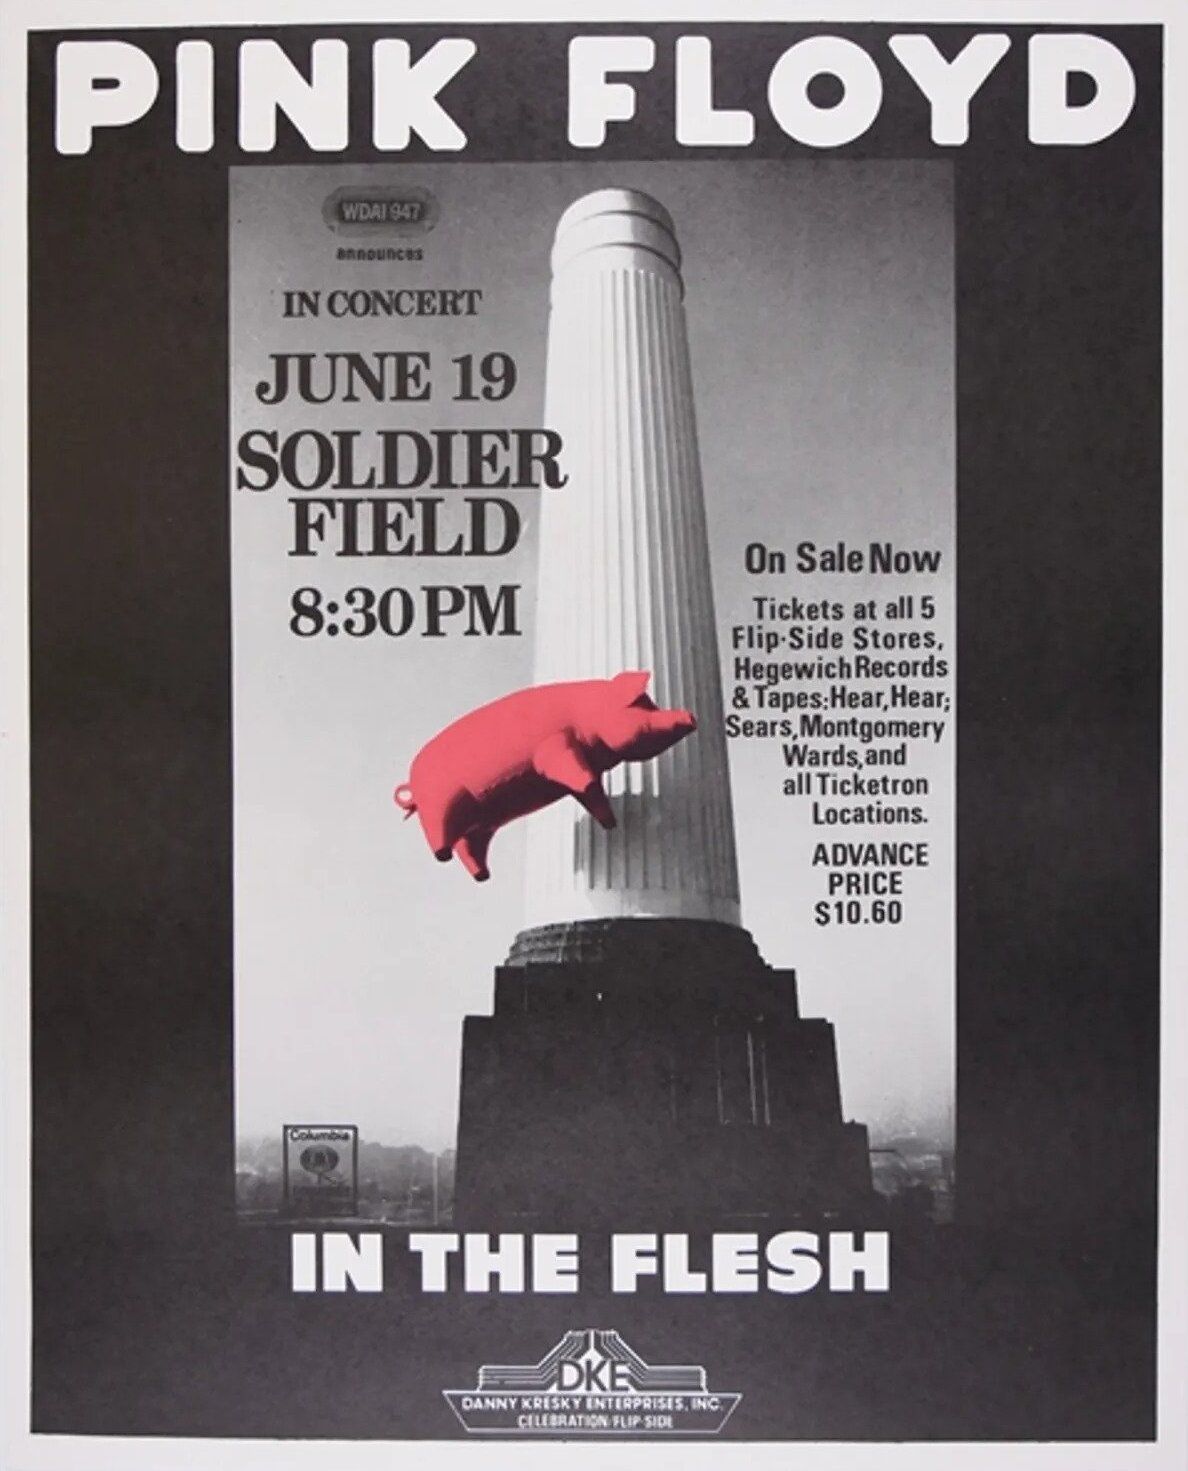 Pink Floyd Soldier Field 1977 Concert Poster